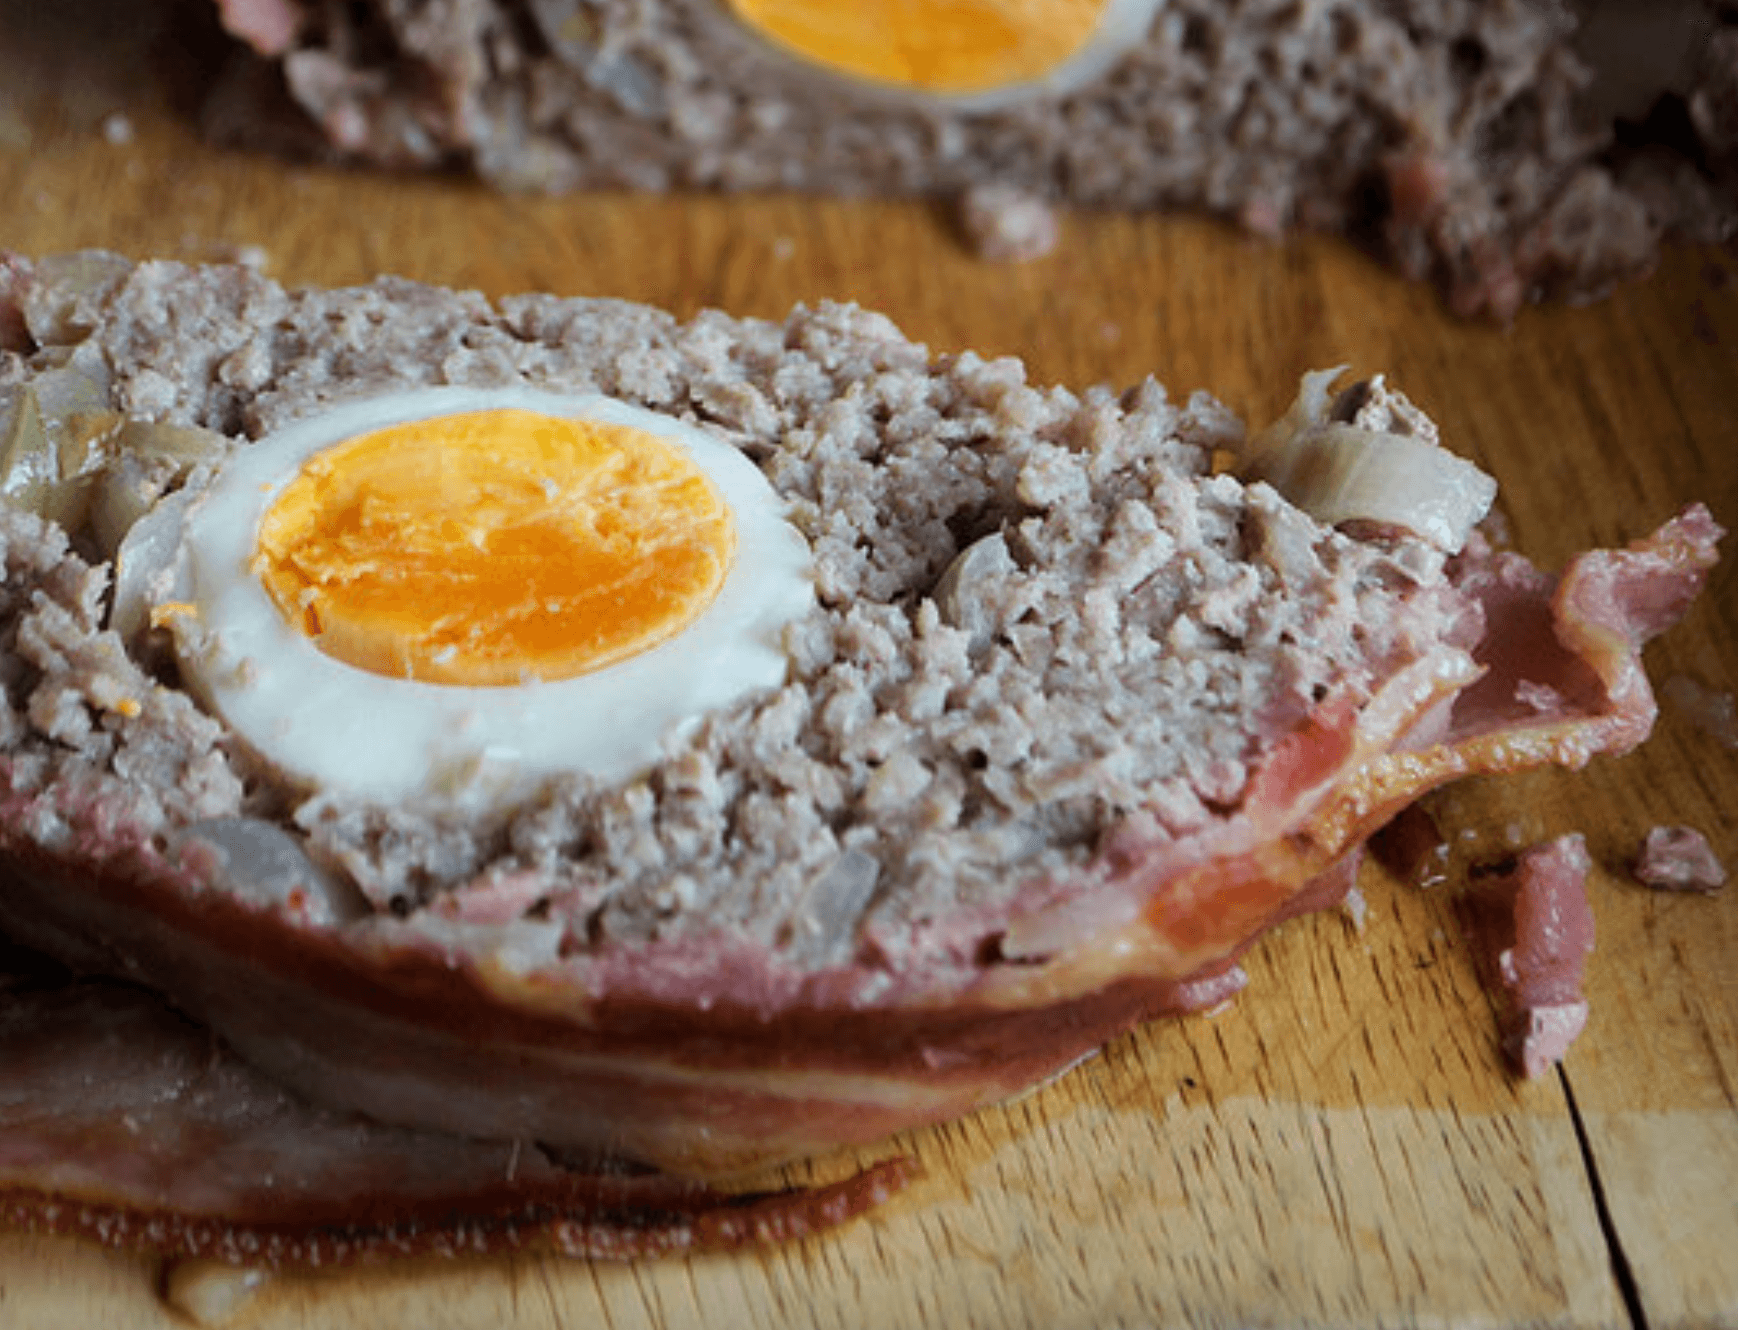  breakfast meatloaf with egg